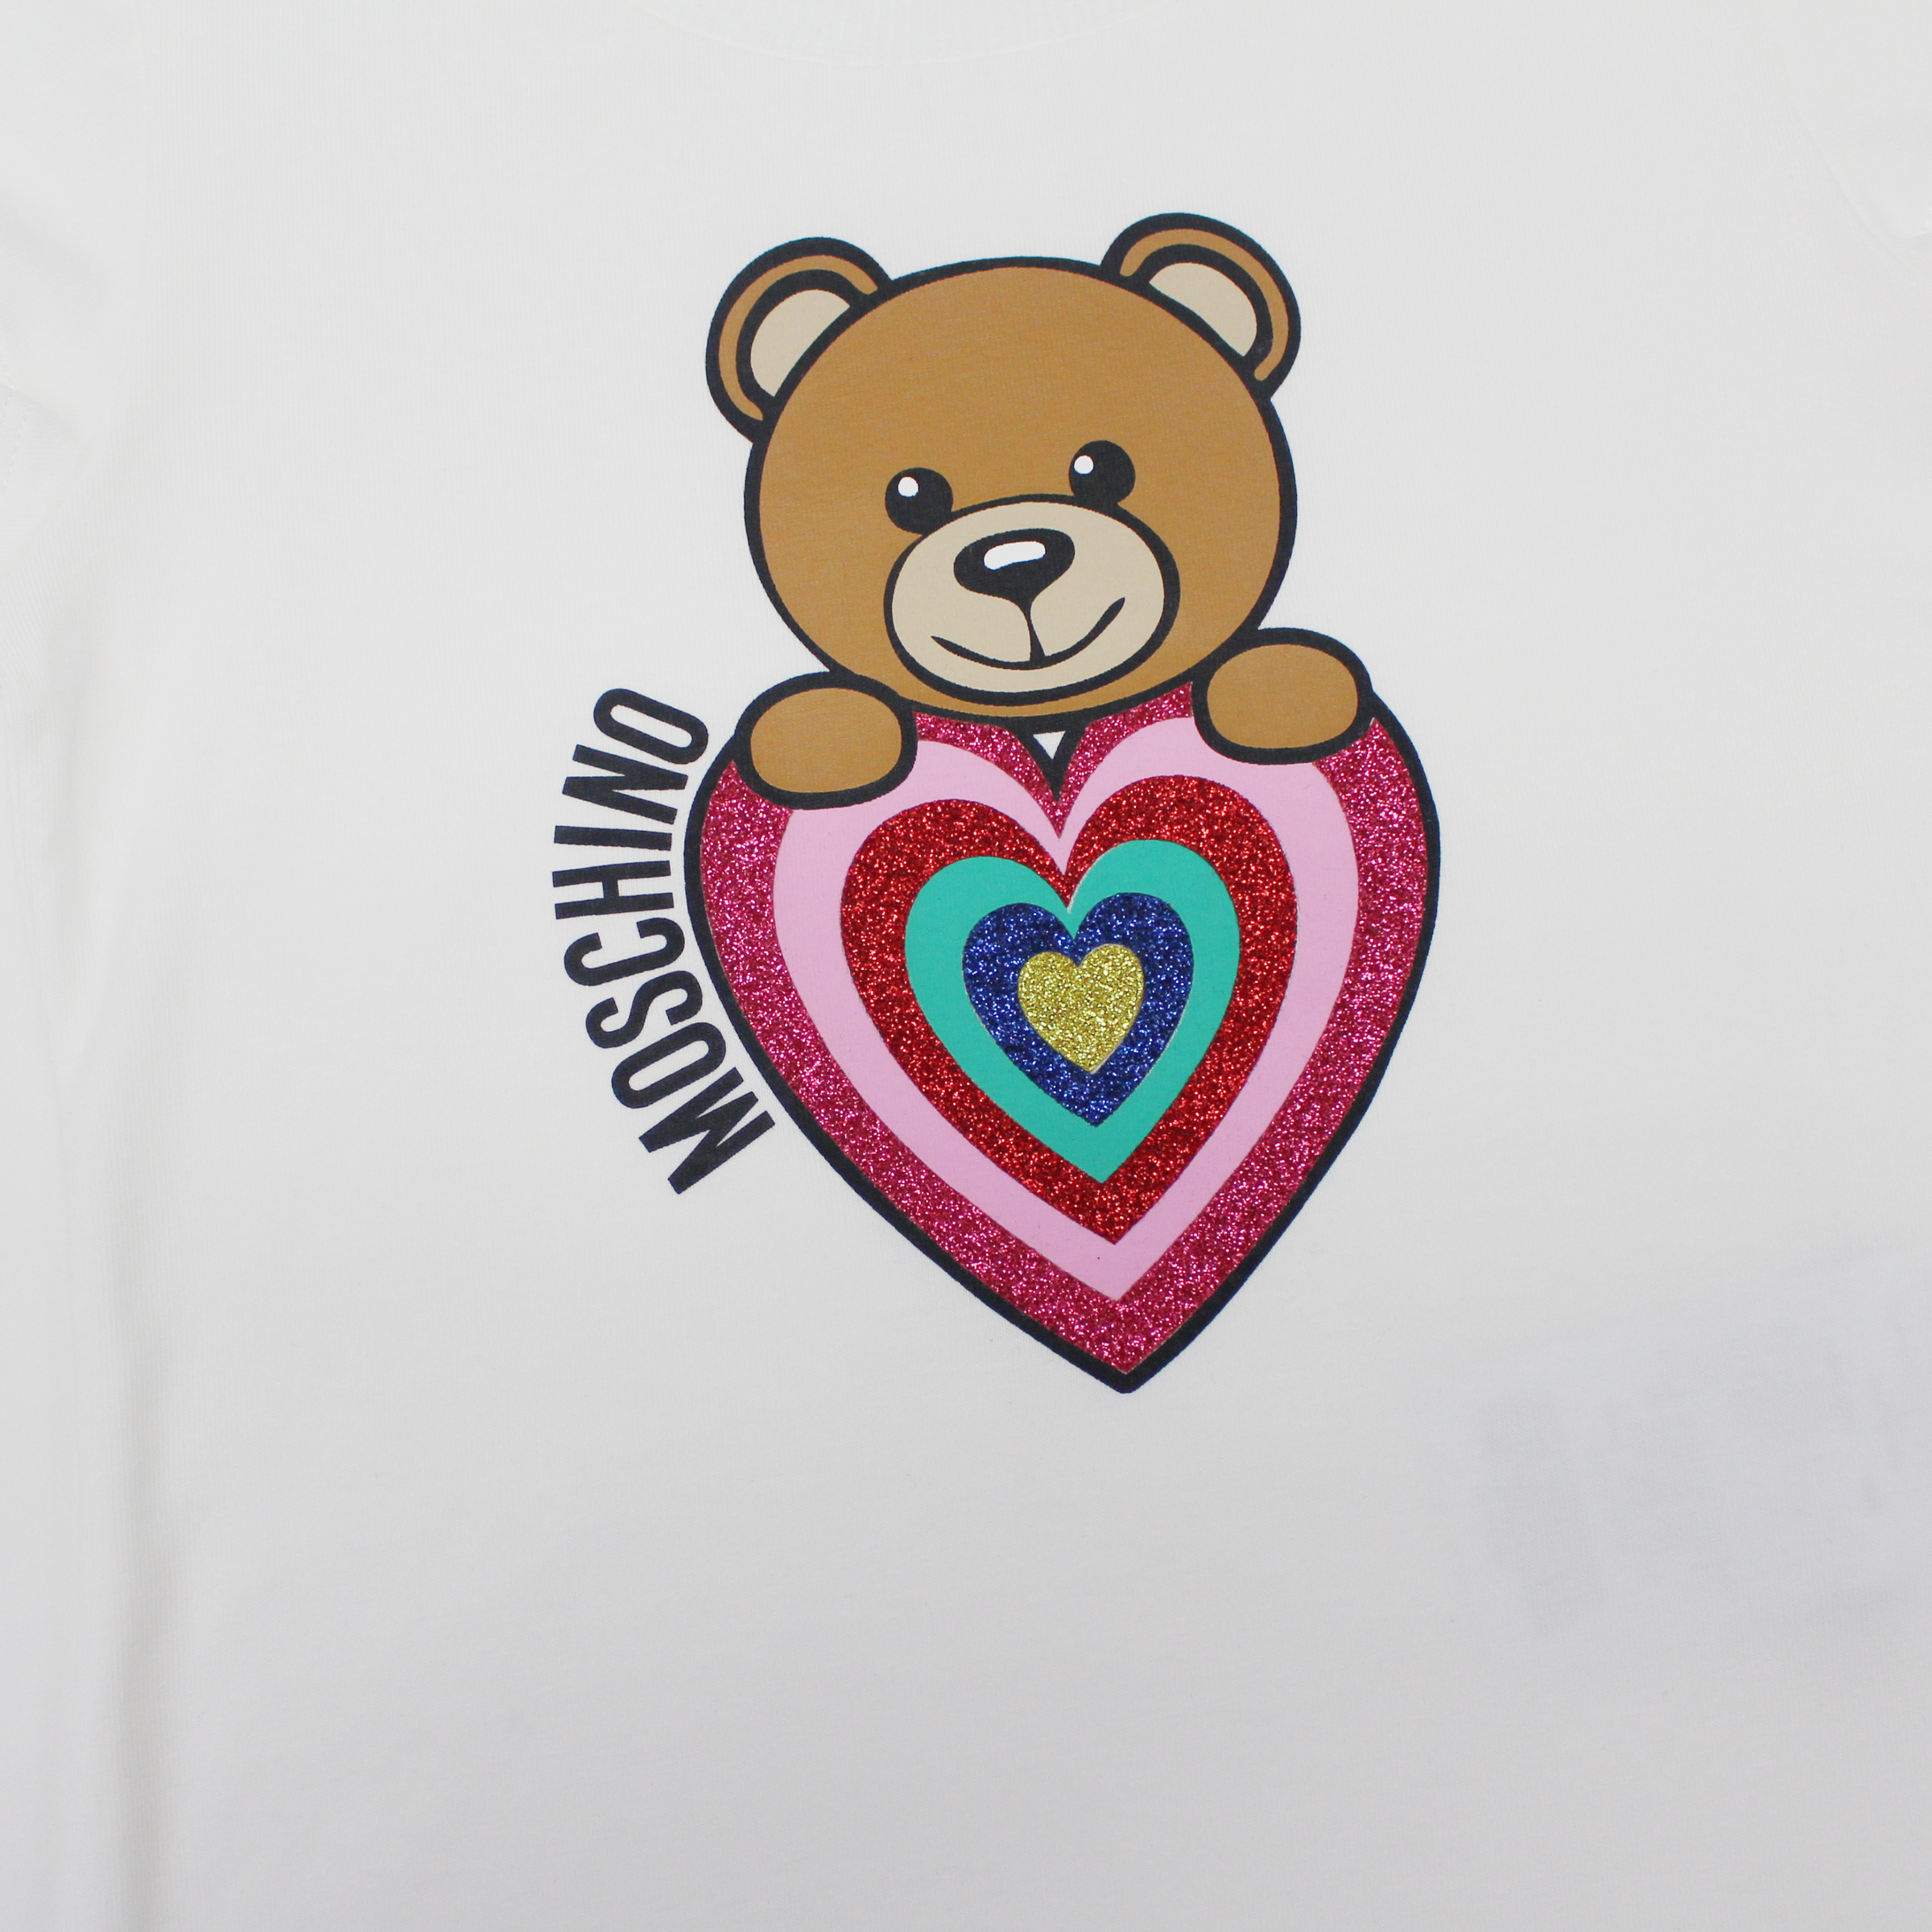 Moschino Kids Logo with Teddy Bear Sweater - Ivory